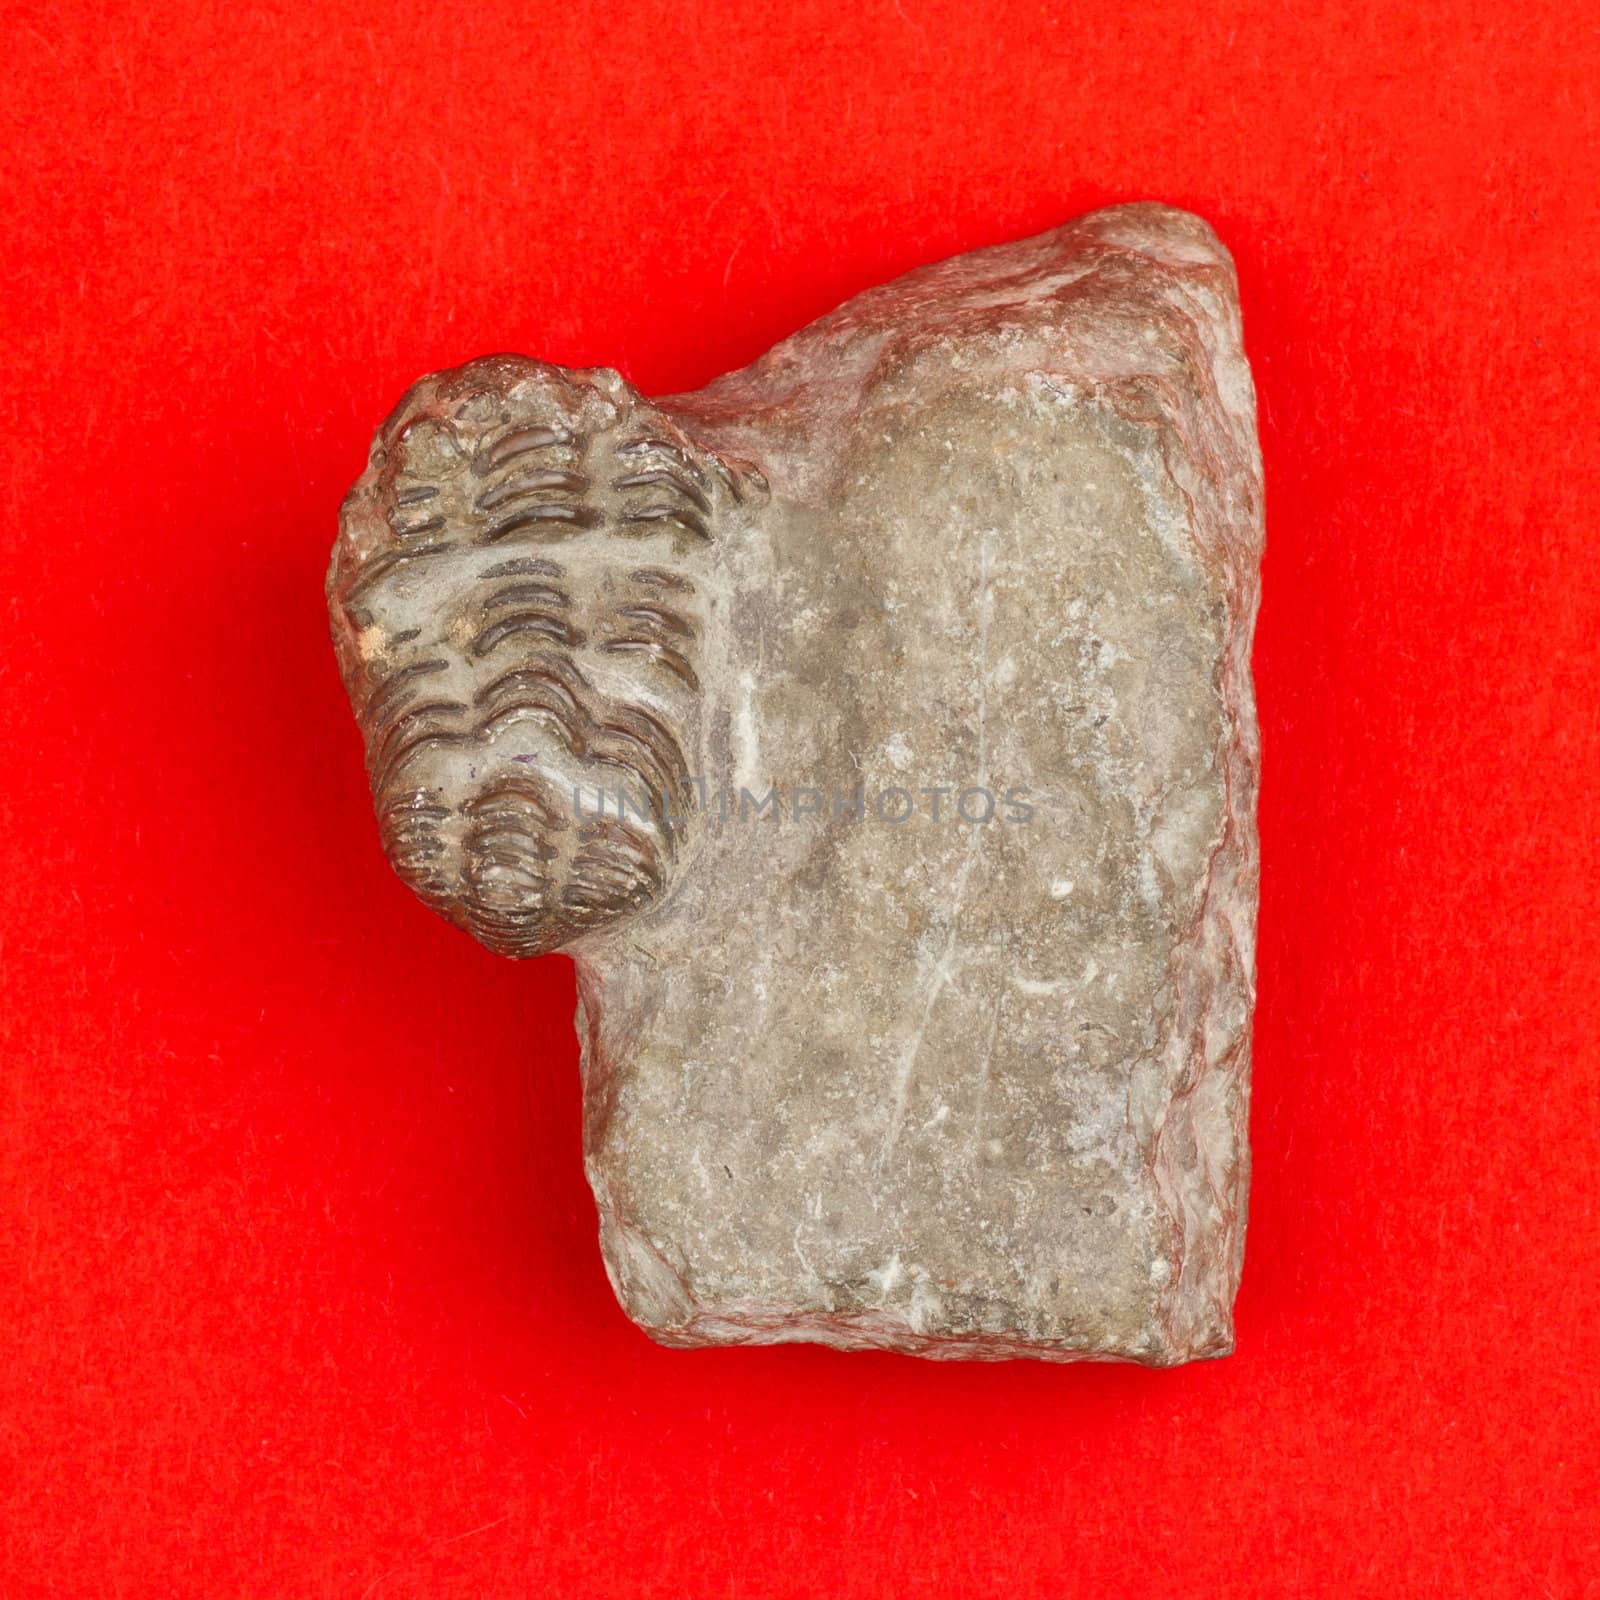 Trilobite fossil  by michaklootwijk